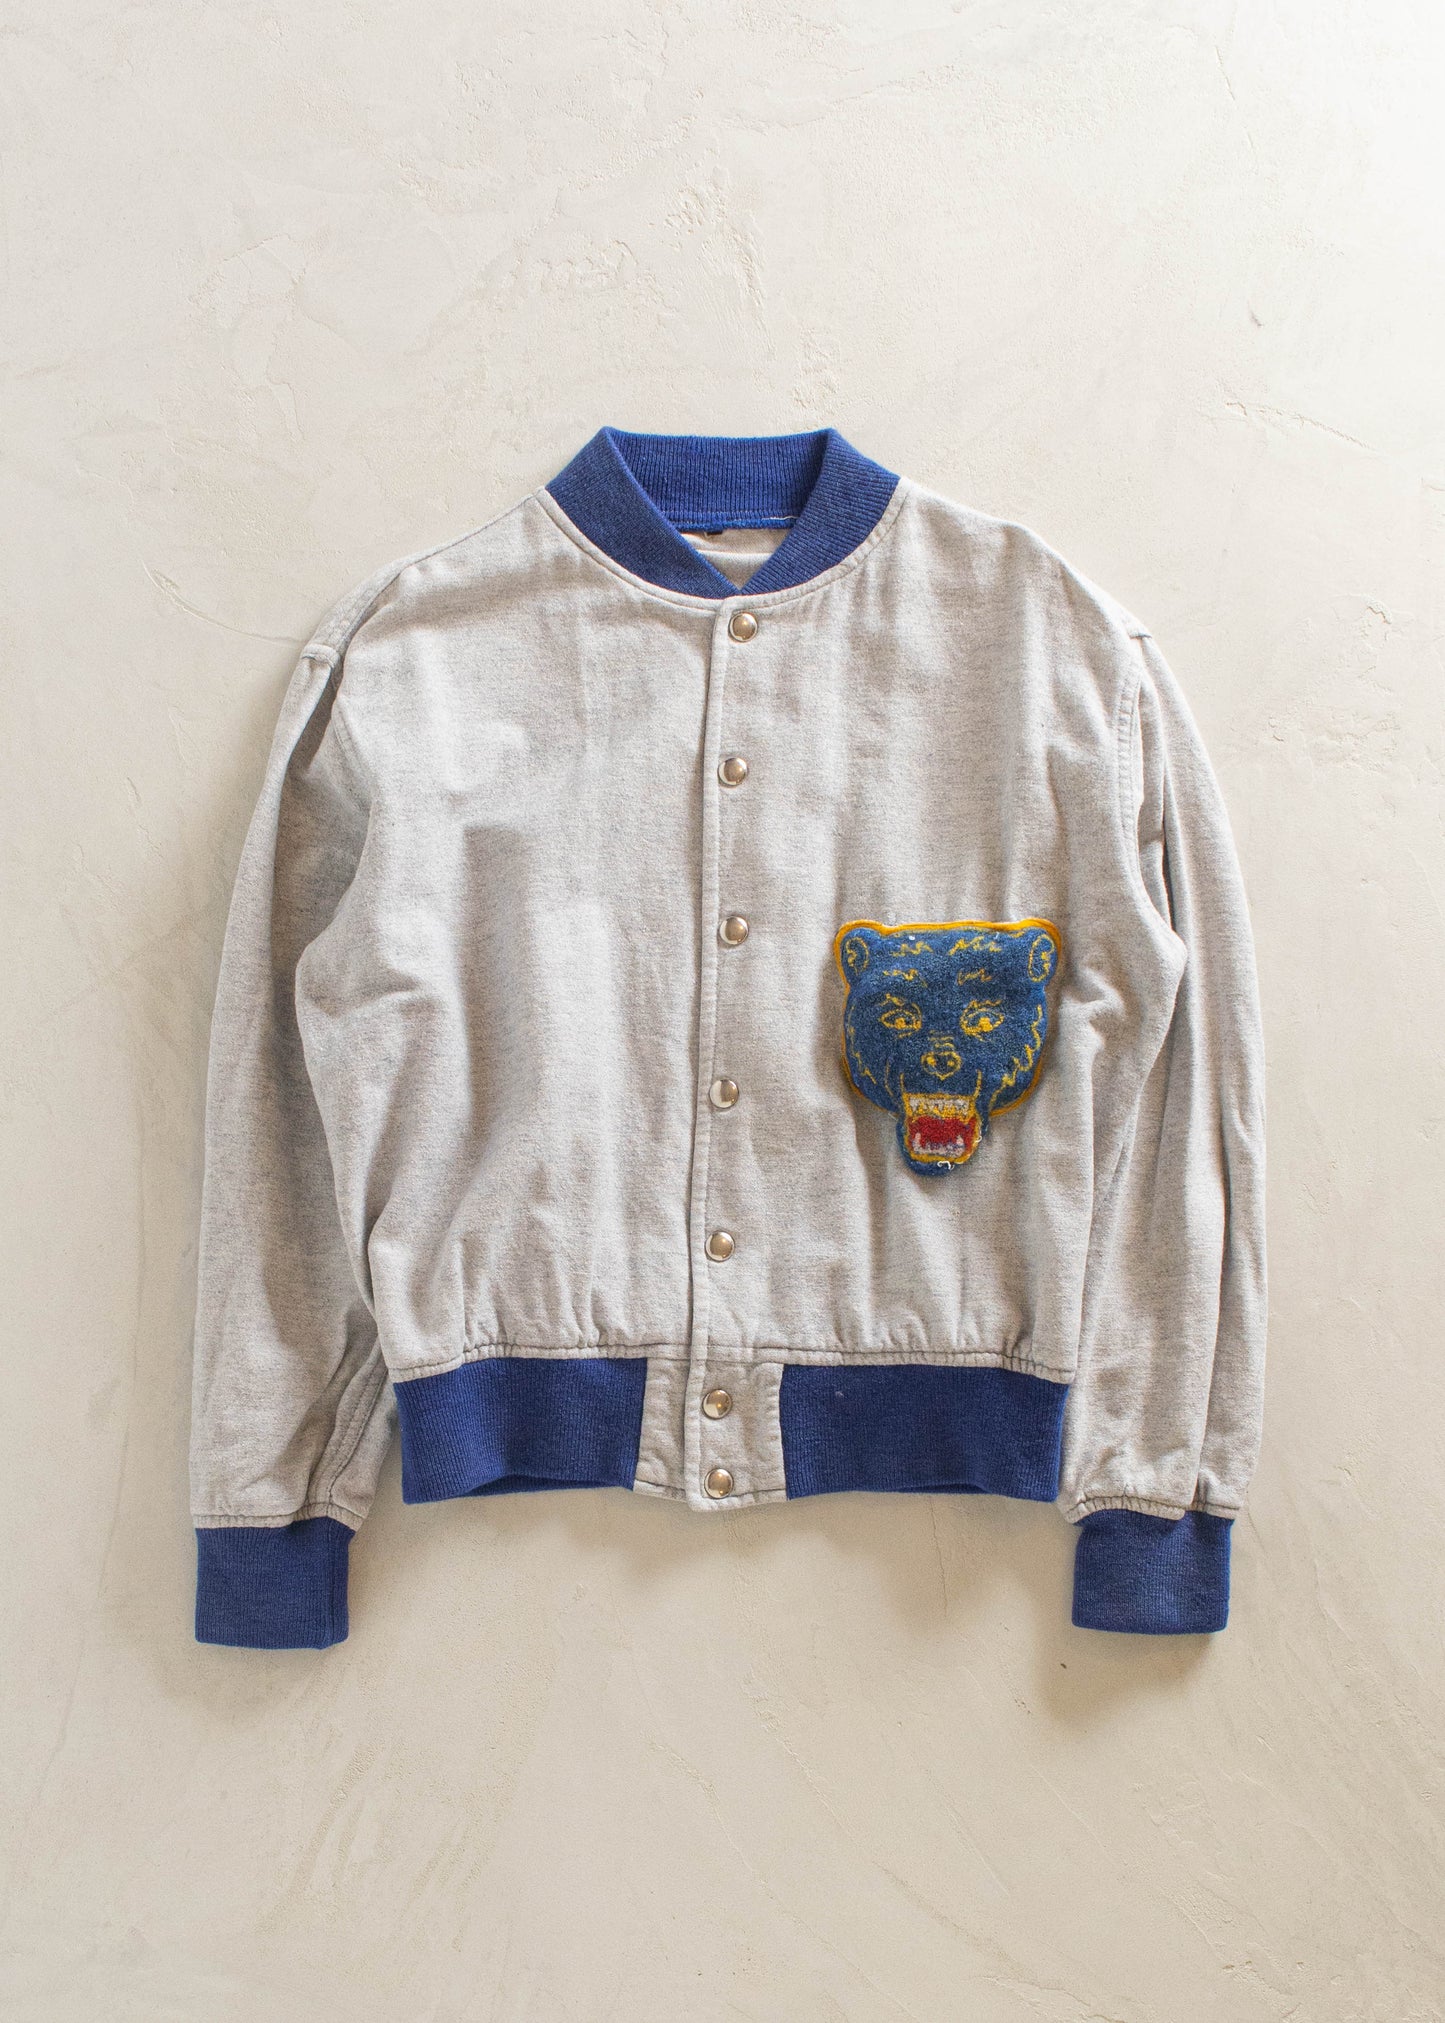 1950s Rawlings Wool Varsity Jacket Size M/L